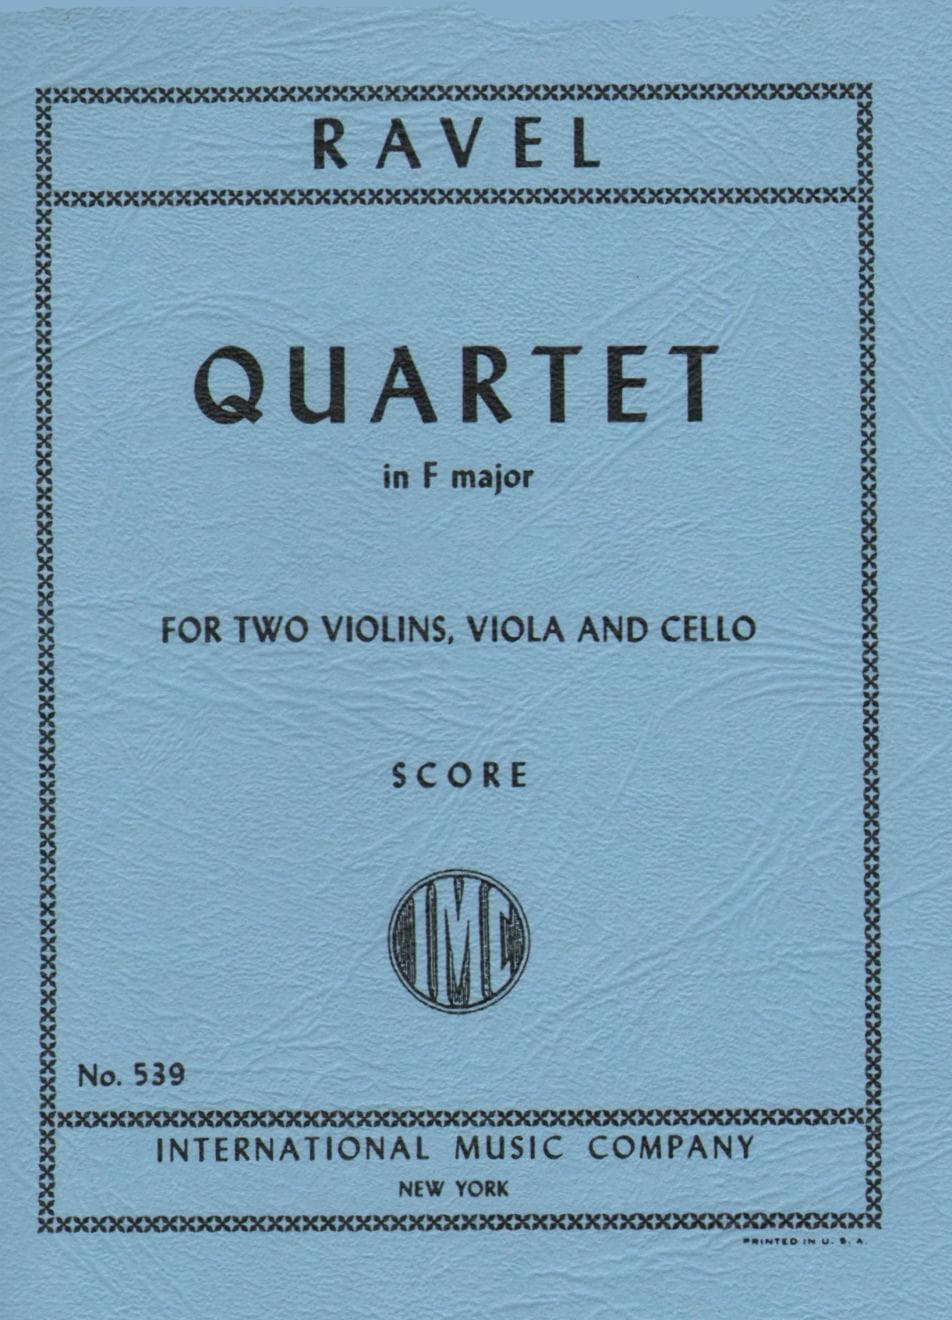 Ravel, Maurice - String Quartet in F Major - Score - edited by the Paganini Quartet - International Music Company